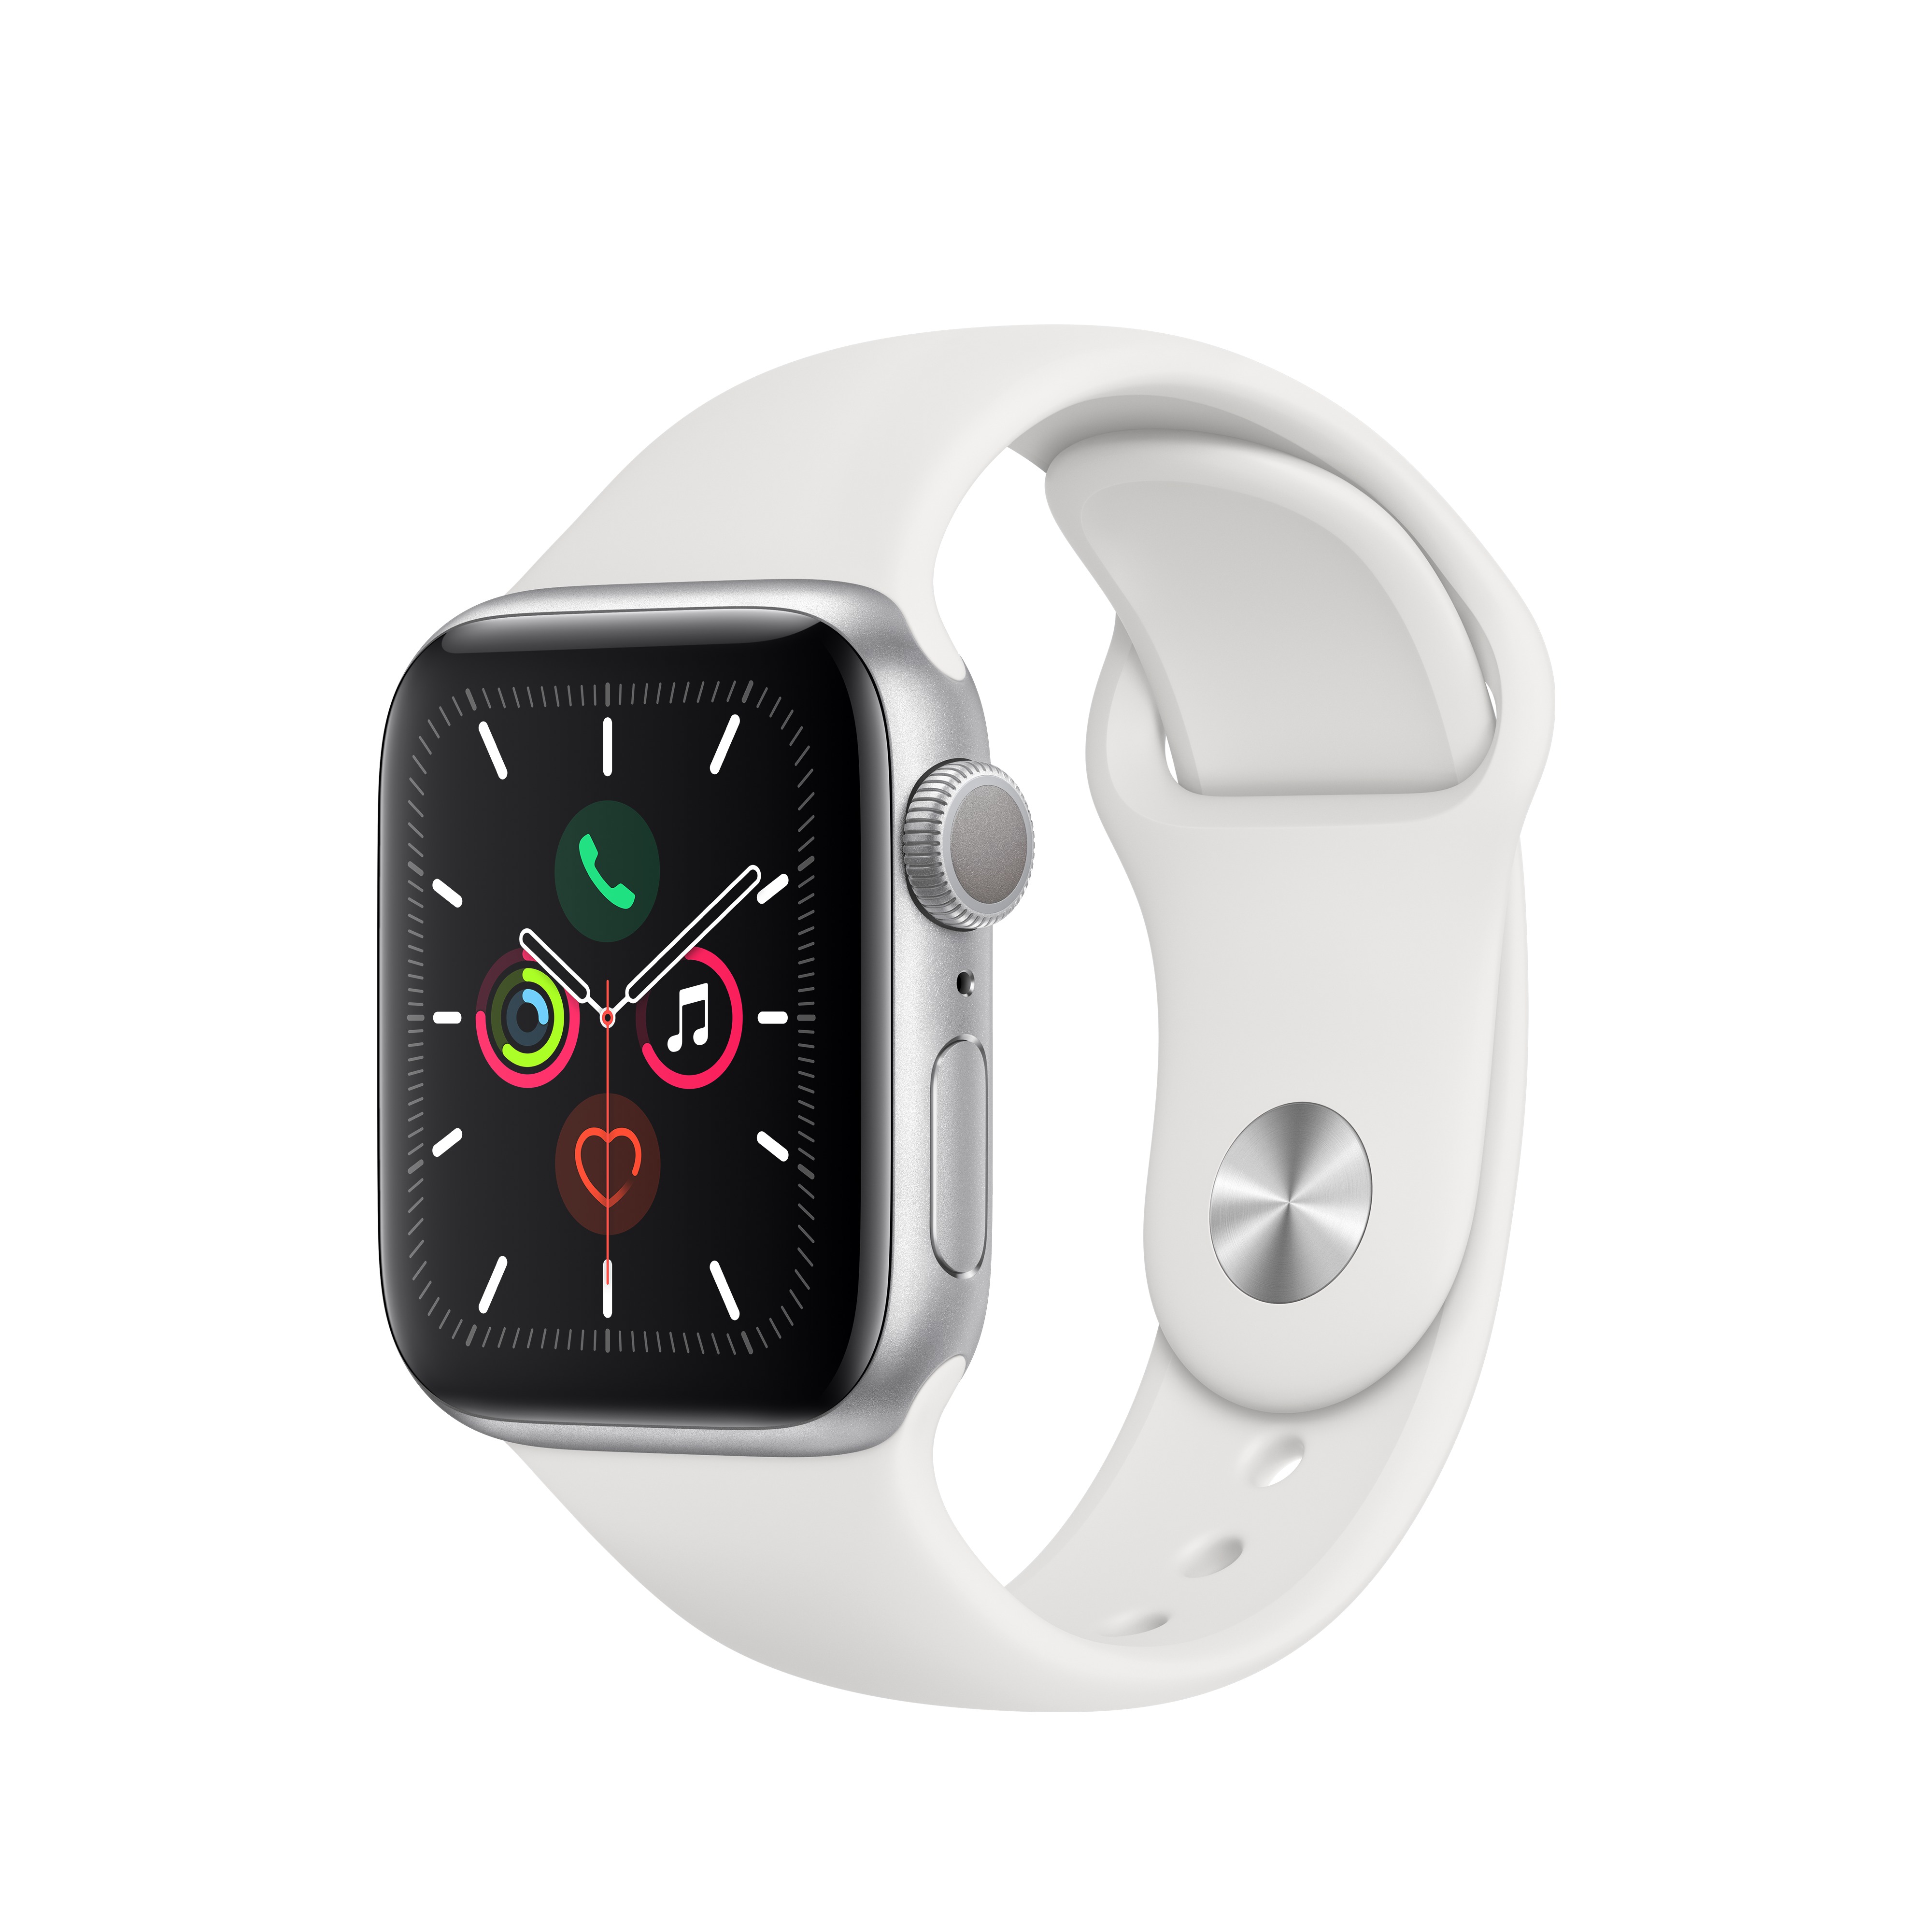 Apple Watch Series 5 w/ GPS On...